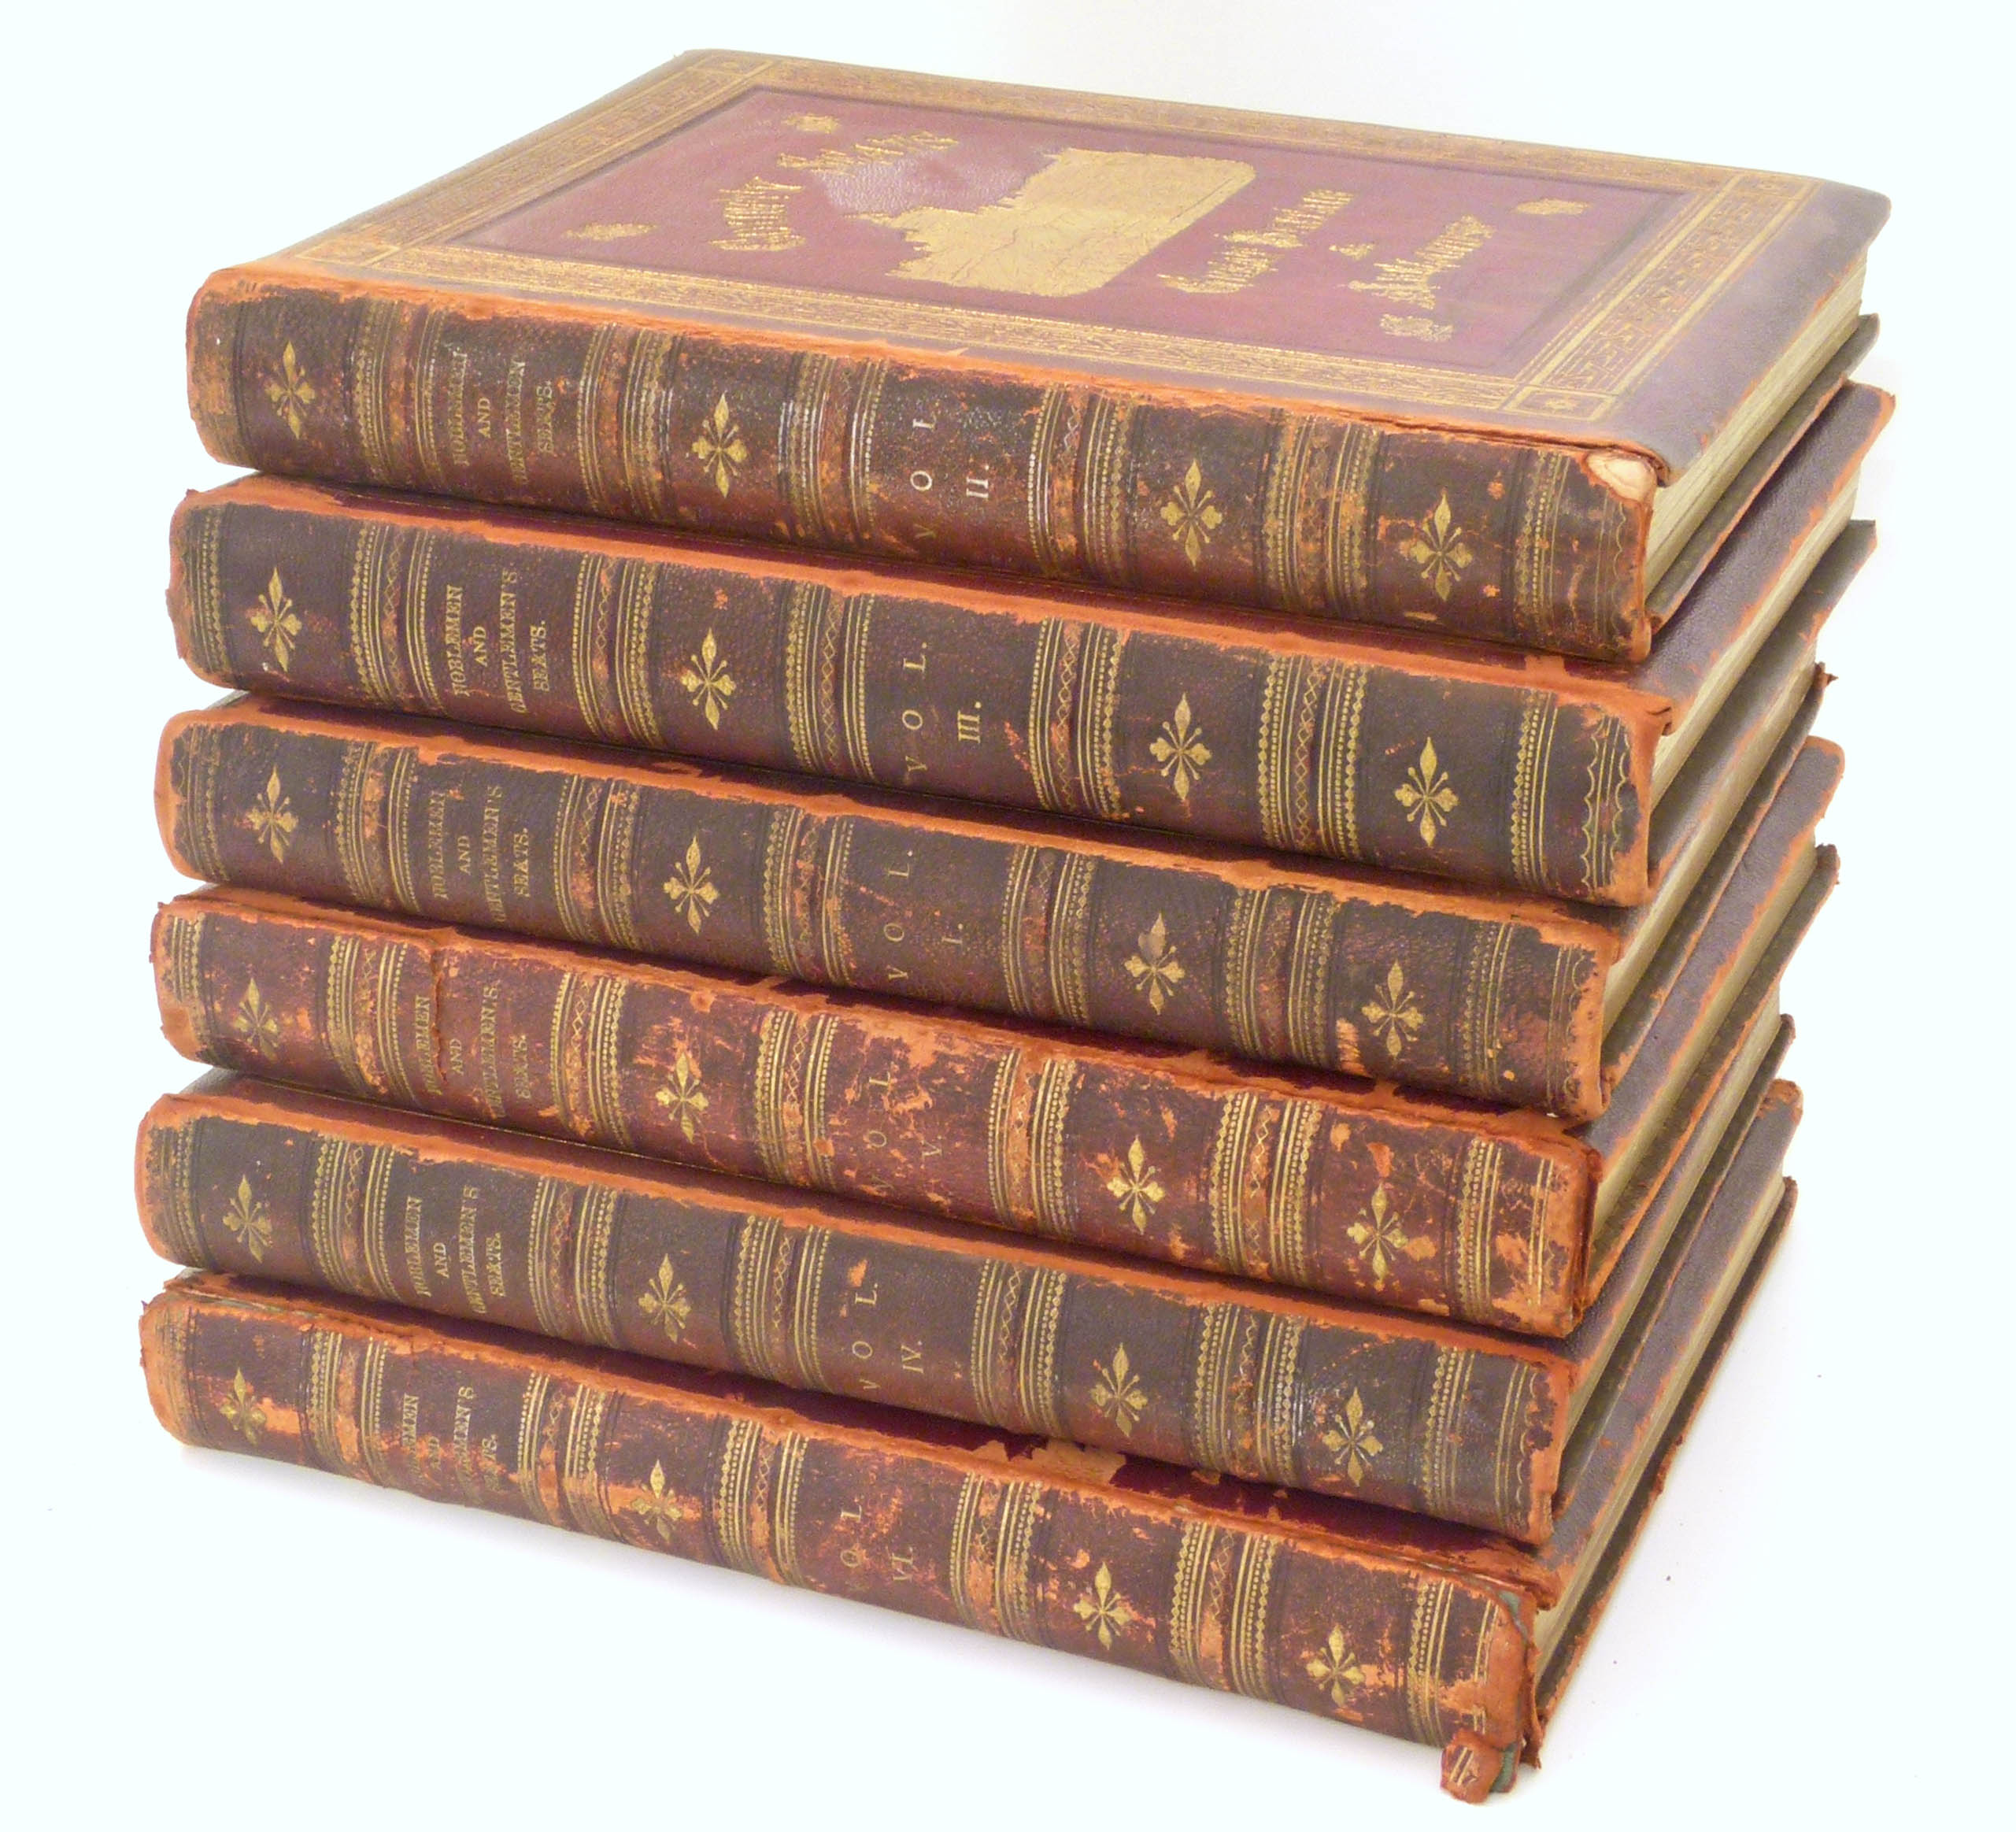 Six volumes of "Country Seats, Great Britain & Ireland Noblemen and Gentlemen" Unfortunately we